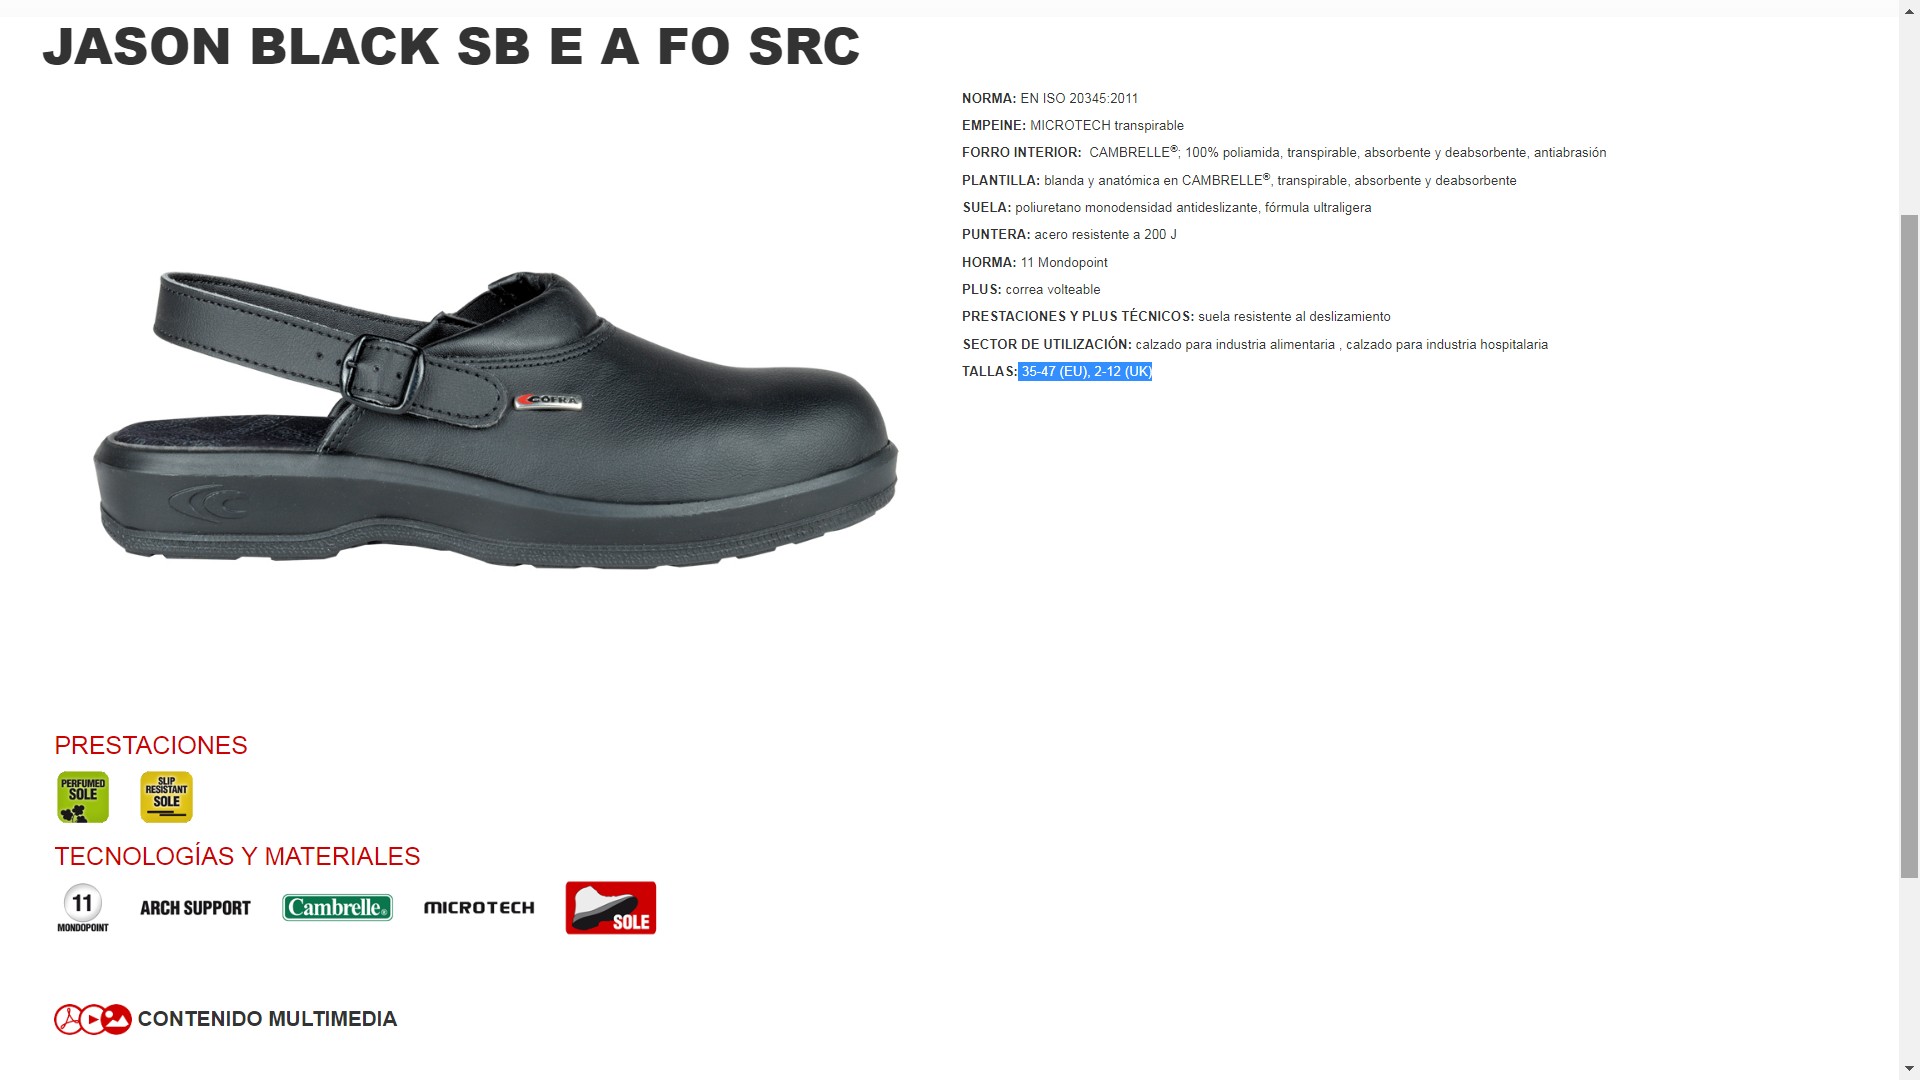 530012  ZUECO JASON BLACK SB E A FO SRC  35-47 (EU), 2-12 (UK)